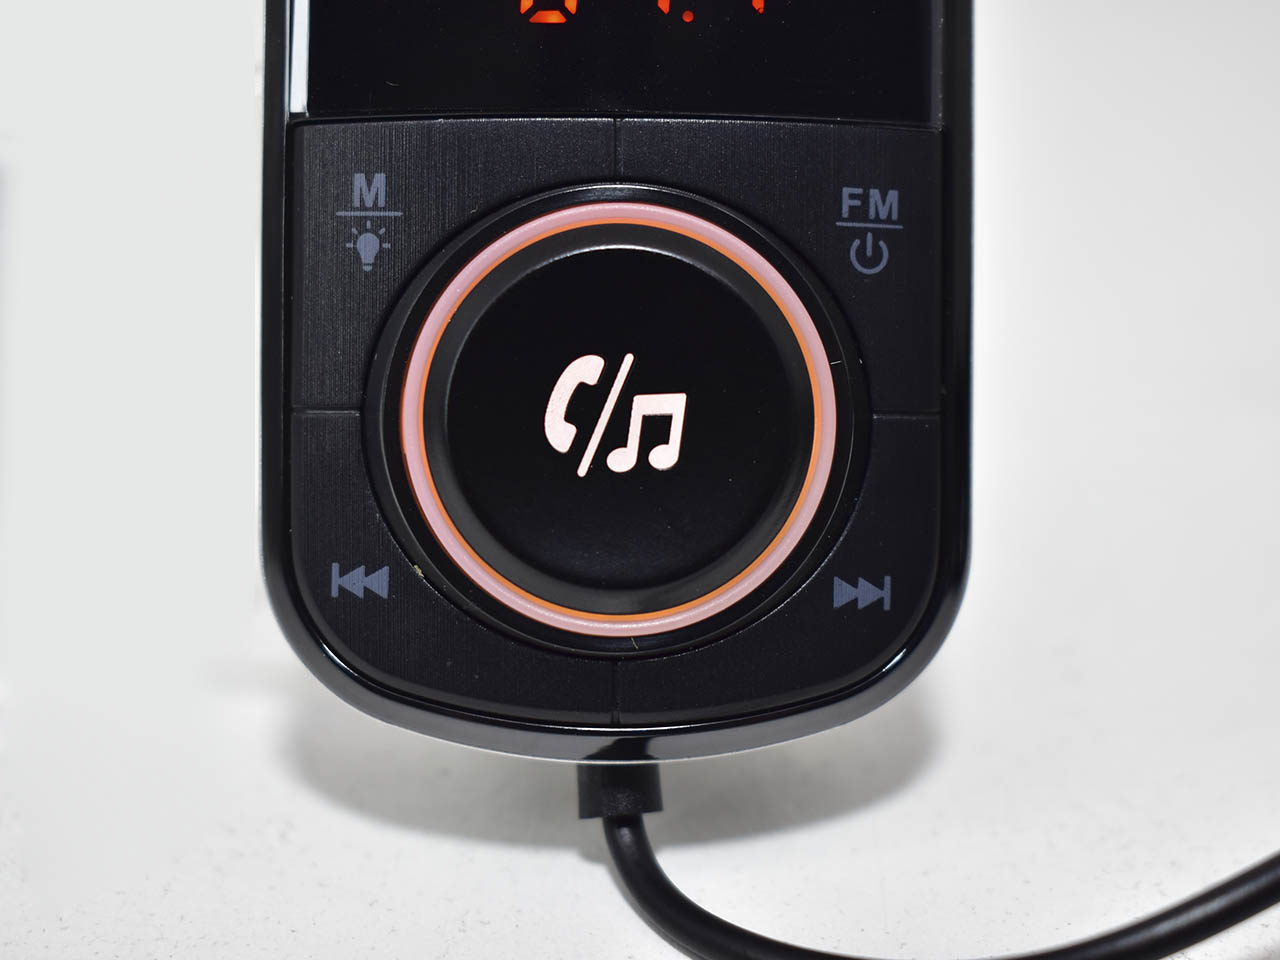 Version 2022] Transmisor FM Bluetooth para Coche, Carga RAPIDA